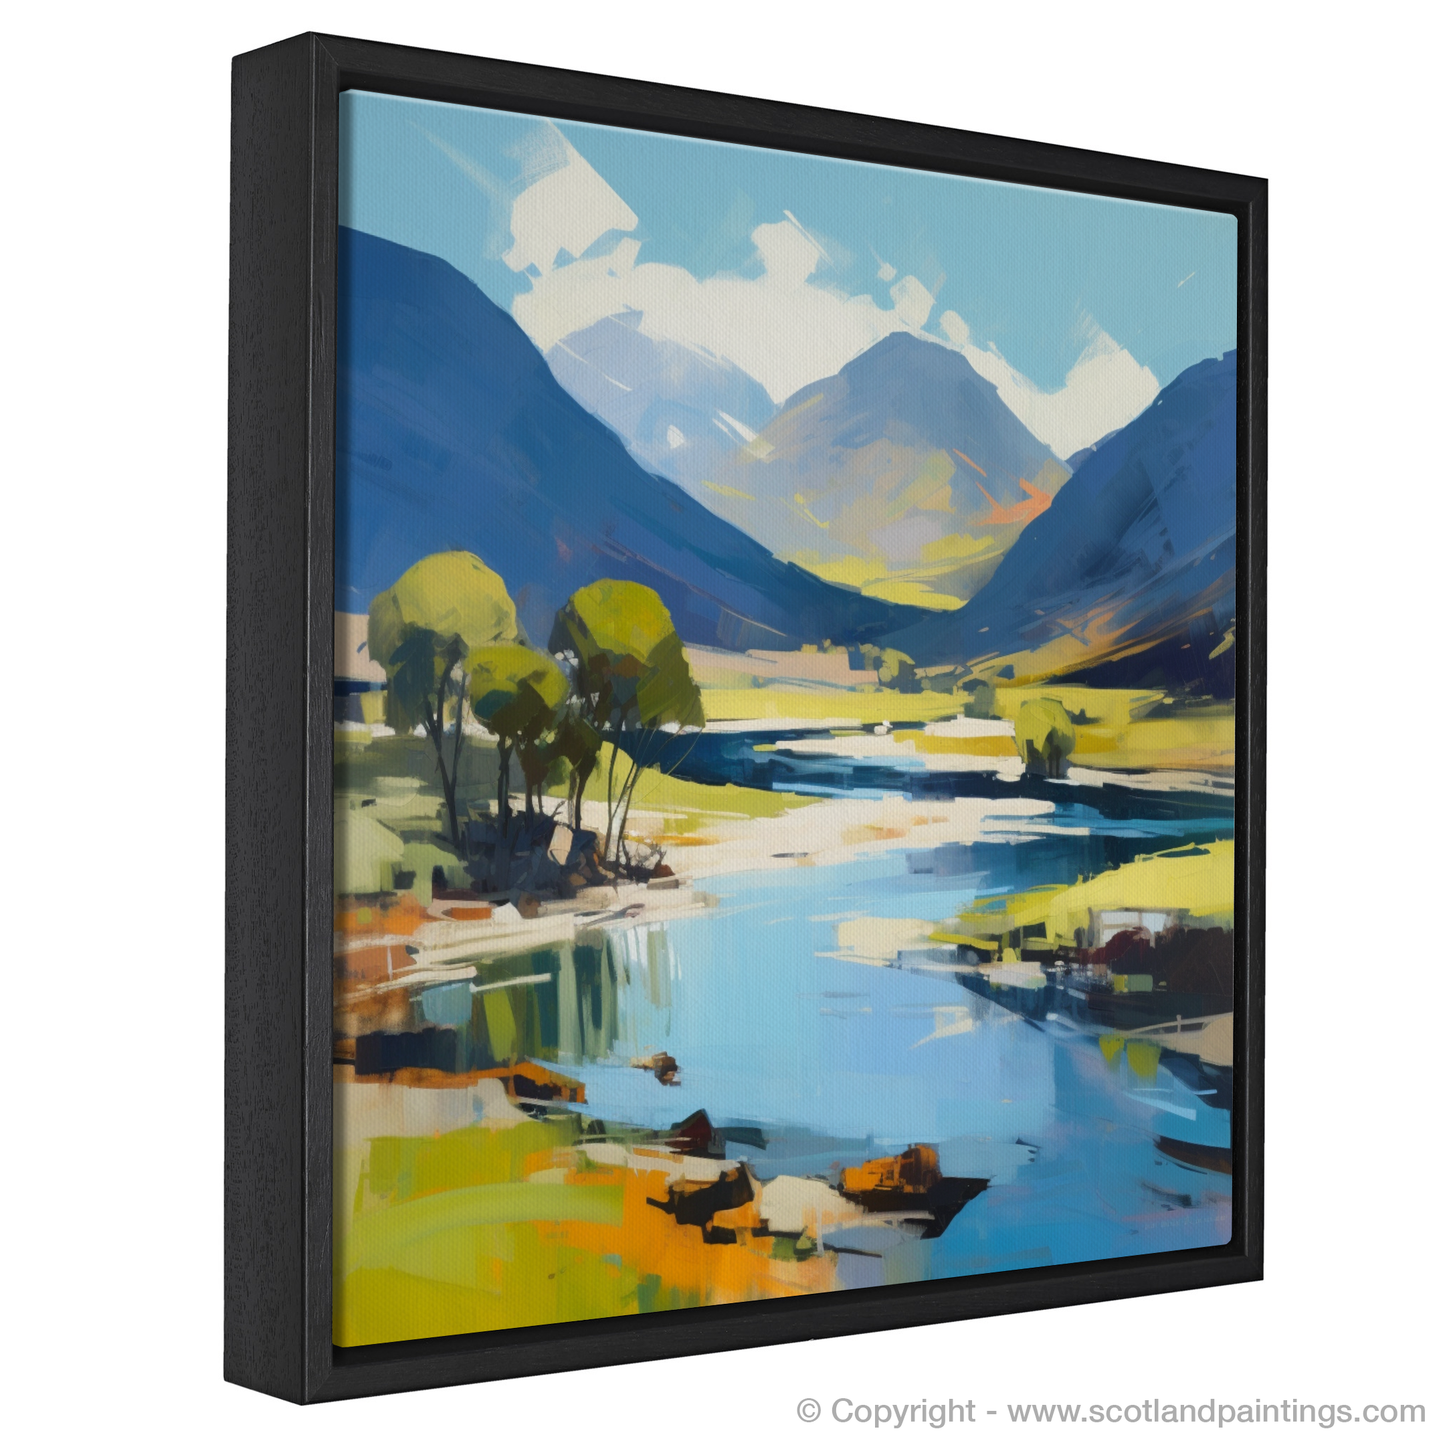 Summer Serenity at Glen Etive: A Contemporary Highland Masterpiece